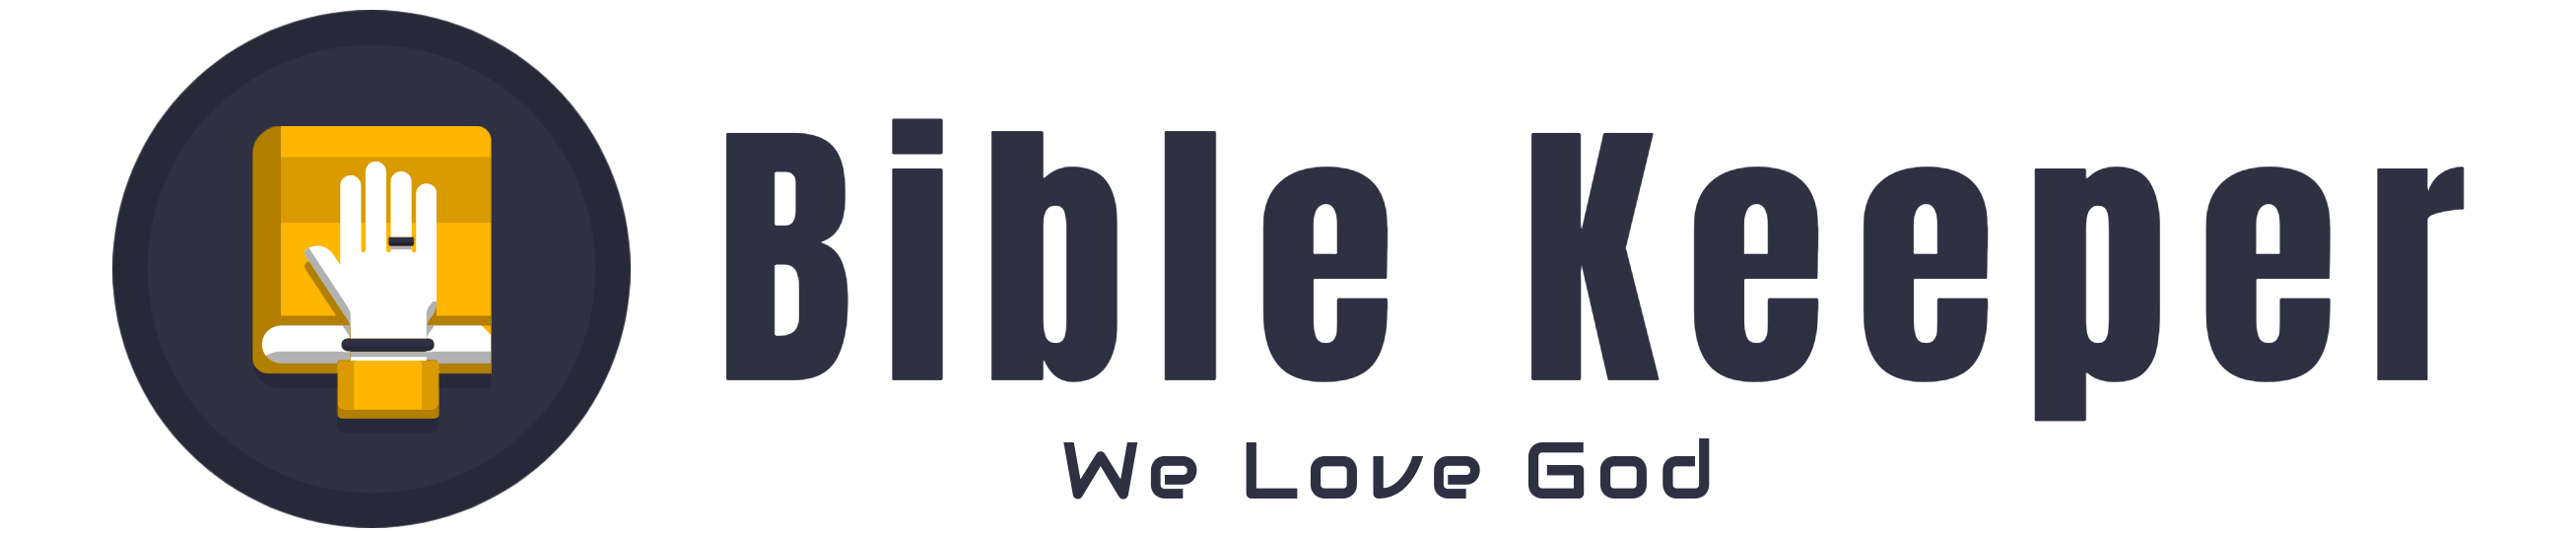 Bible Keeper Logo